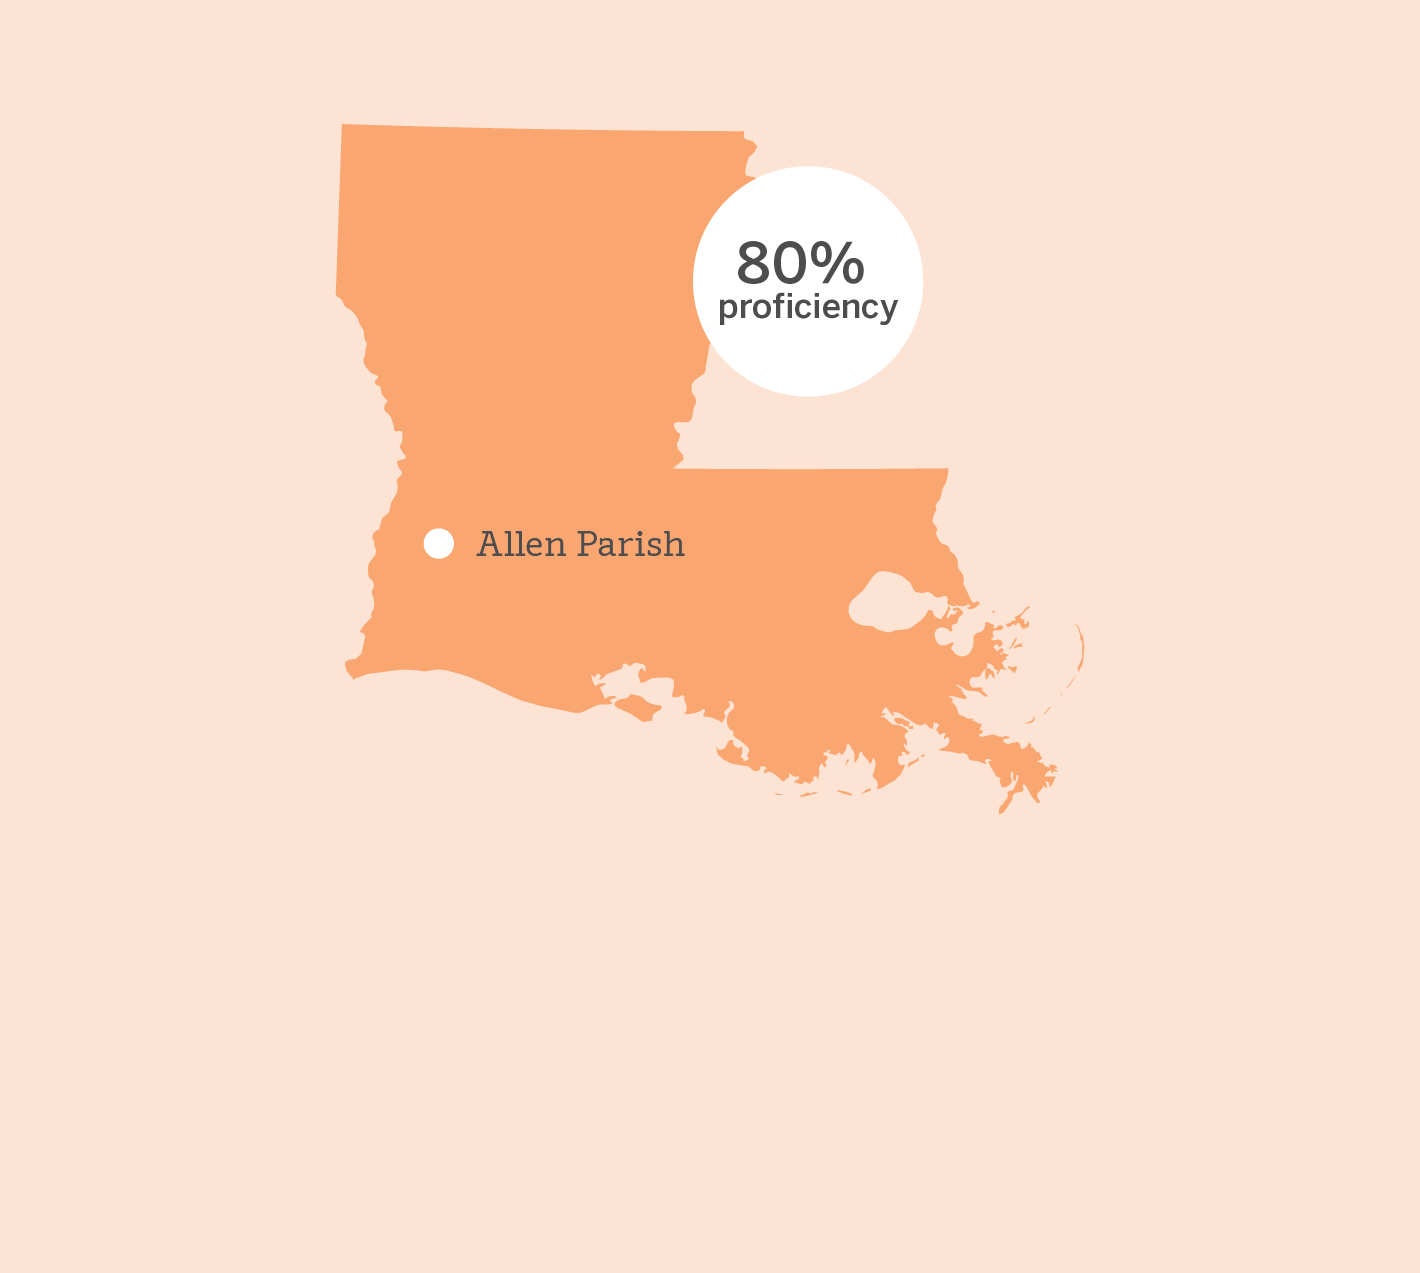 Map of Louisiana highlighting Allen Parish in orange with an 